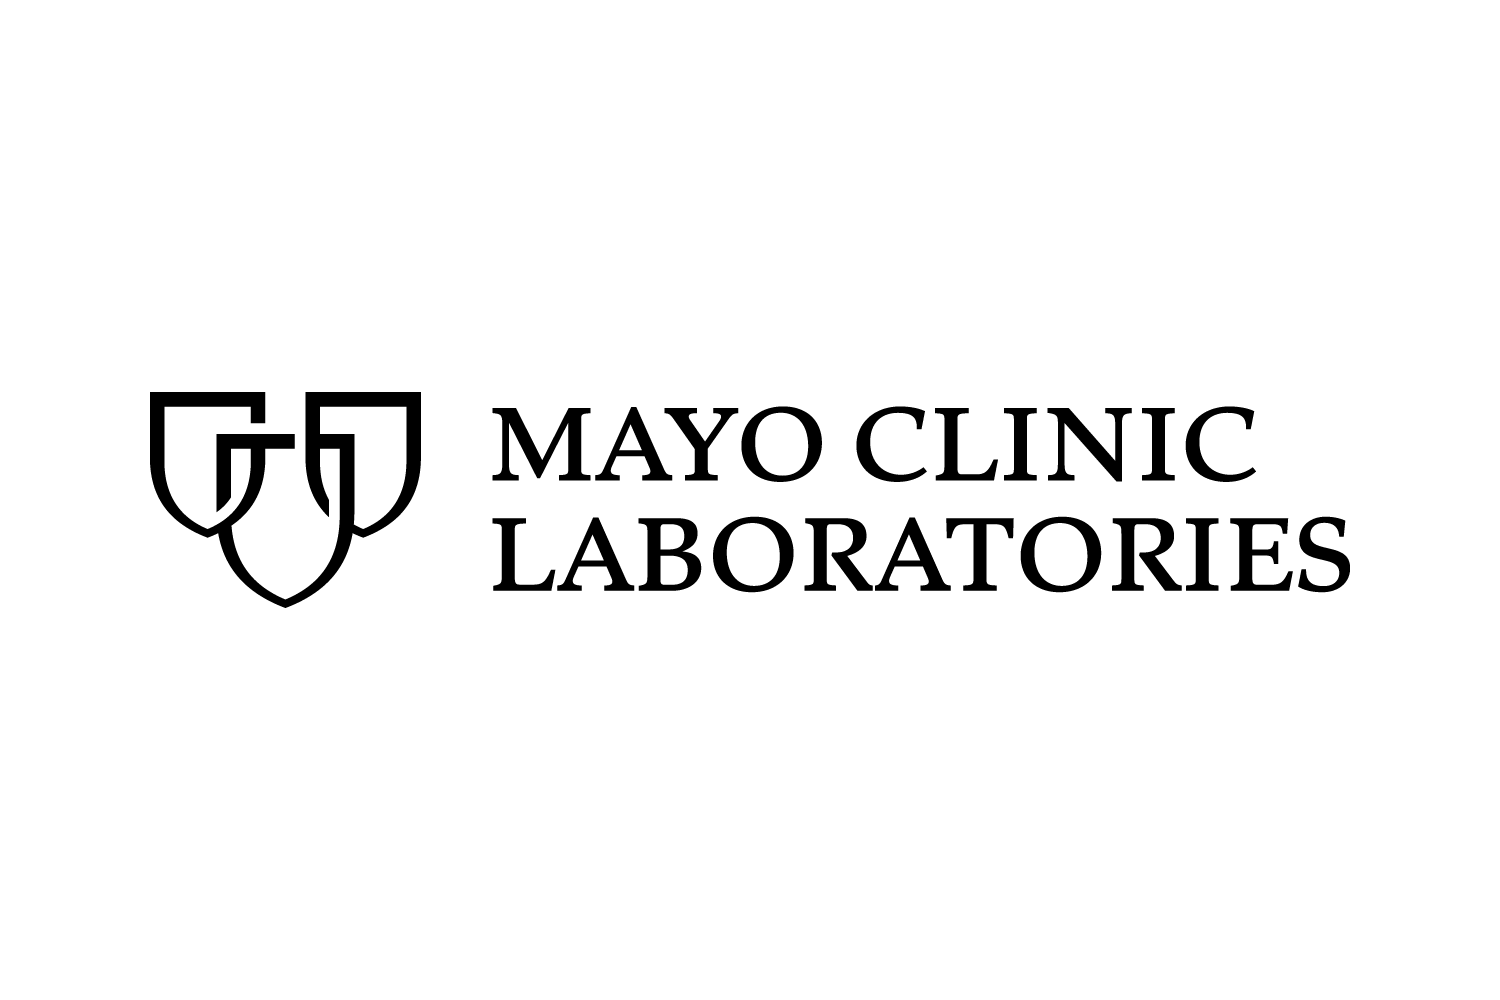 Mayo Clinic Laboratories logo.